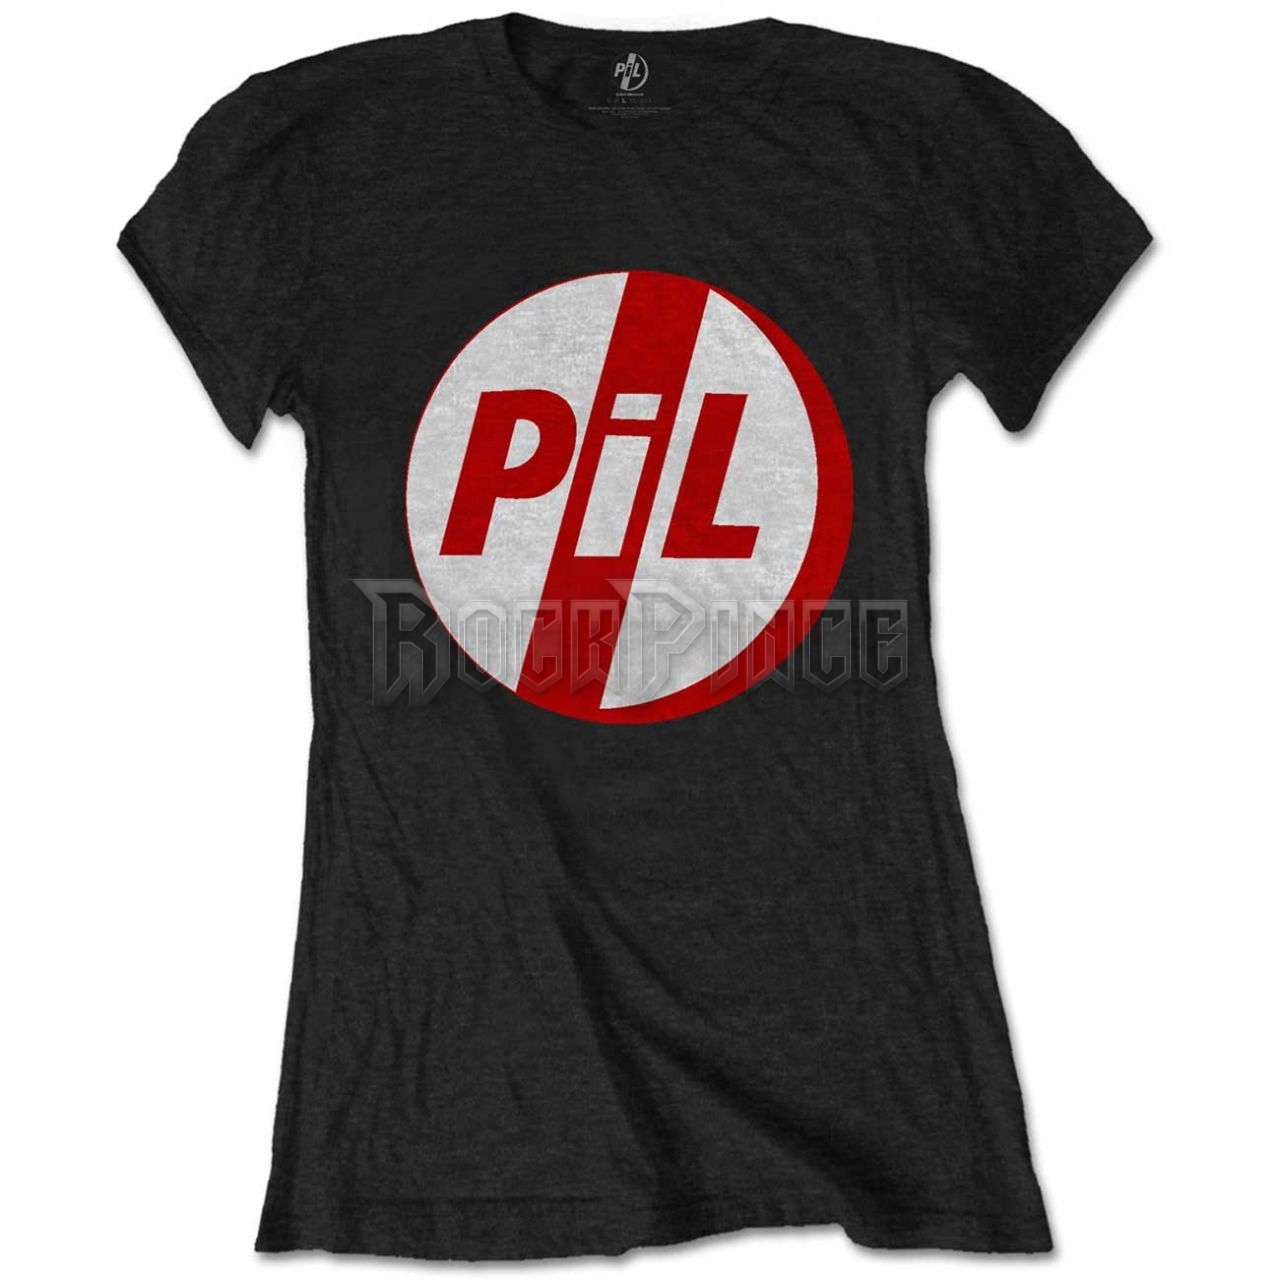 PIL (Public Image Ltd) - Logo - női póló - PILTS01LB